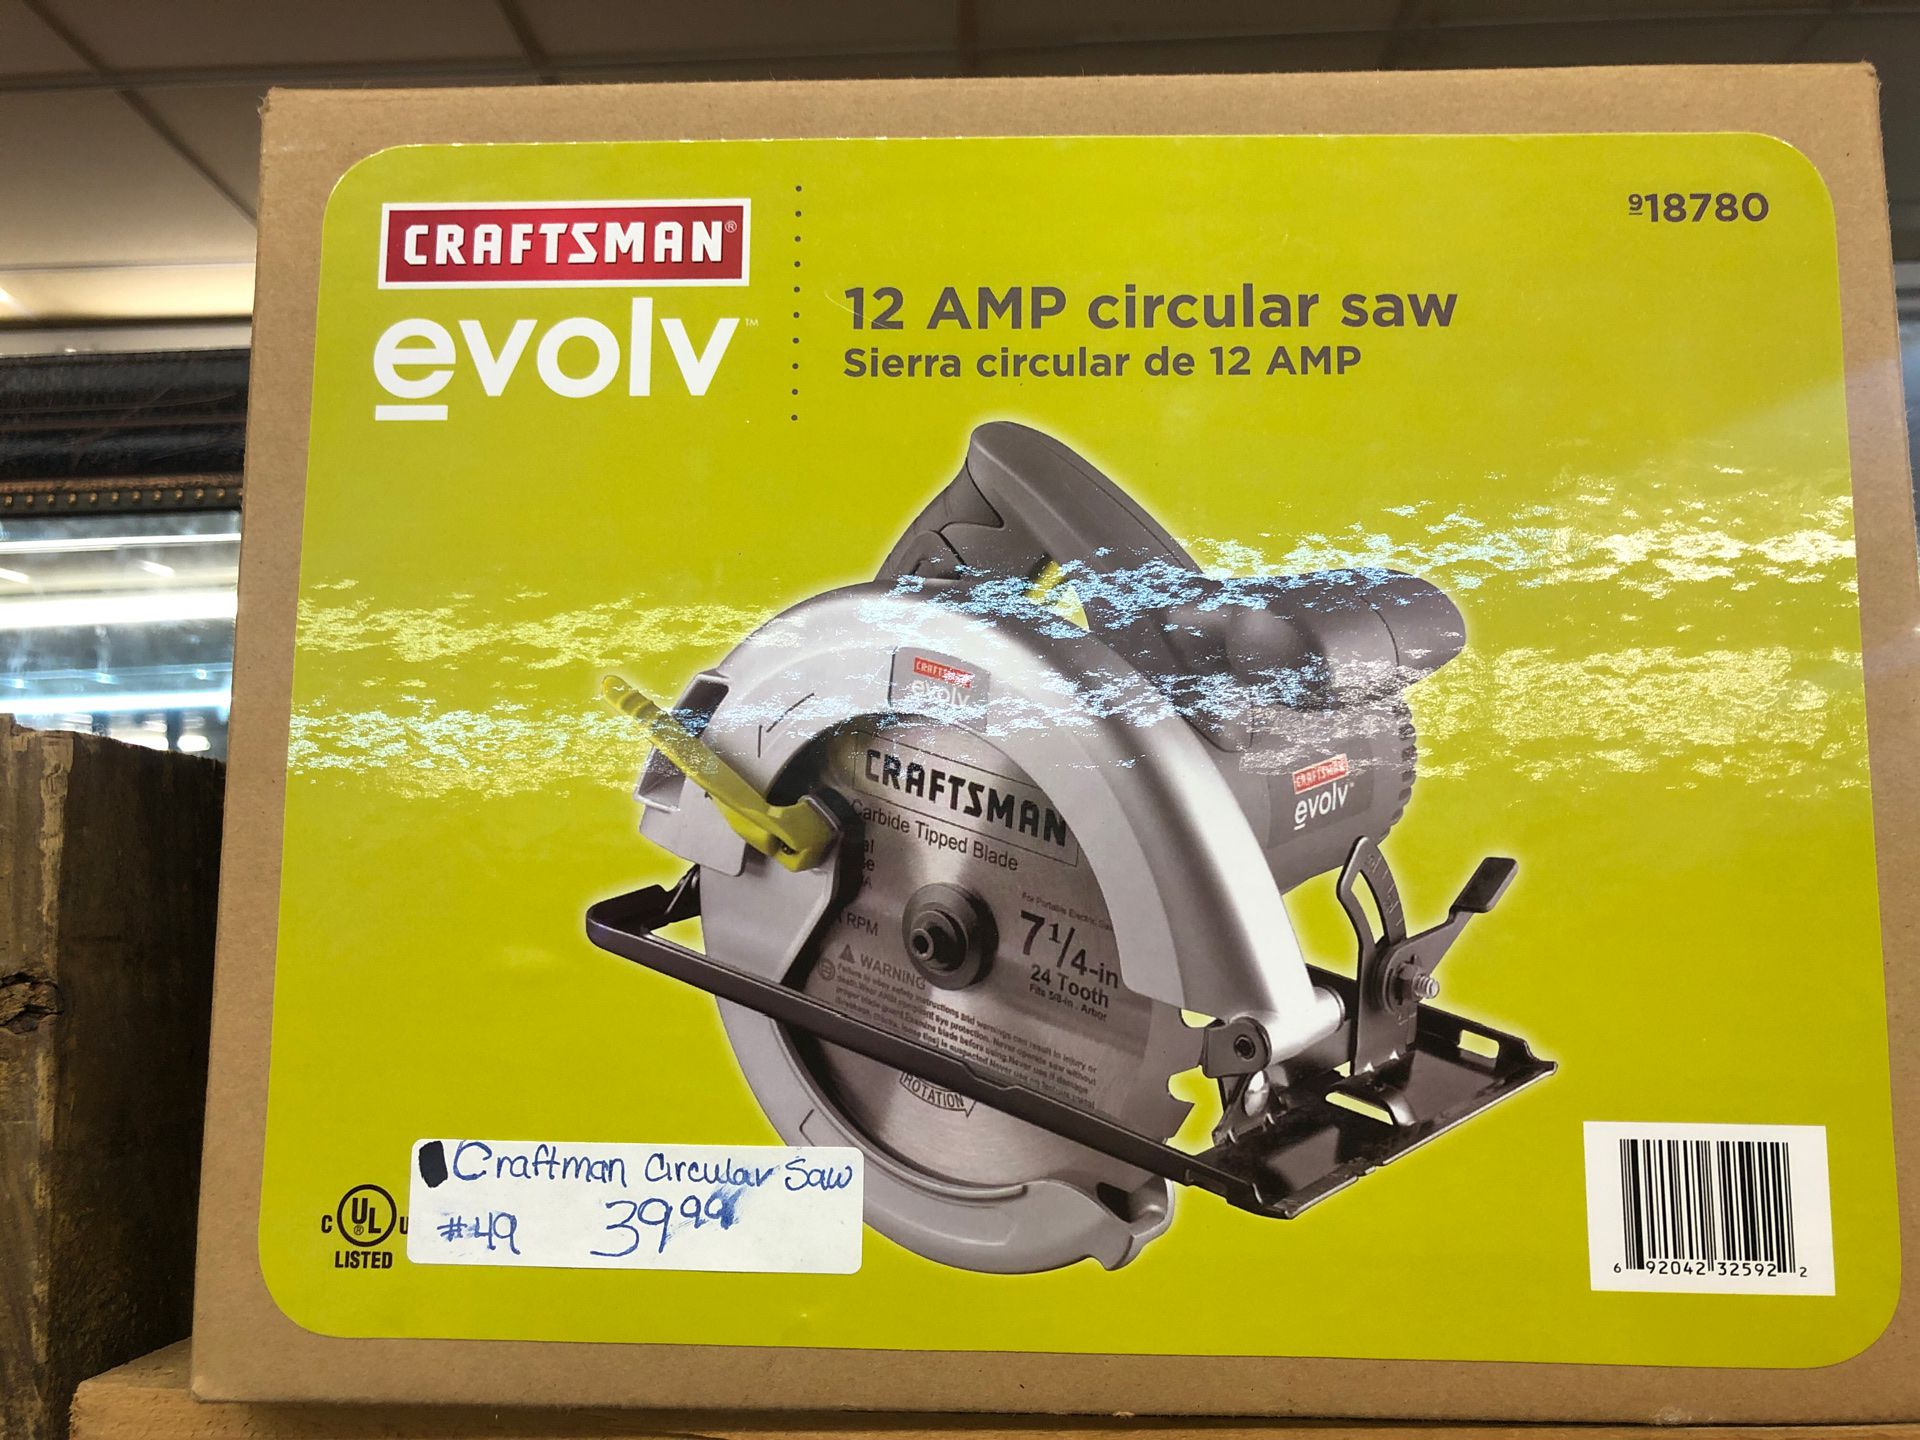 Craftsman’s circular saw